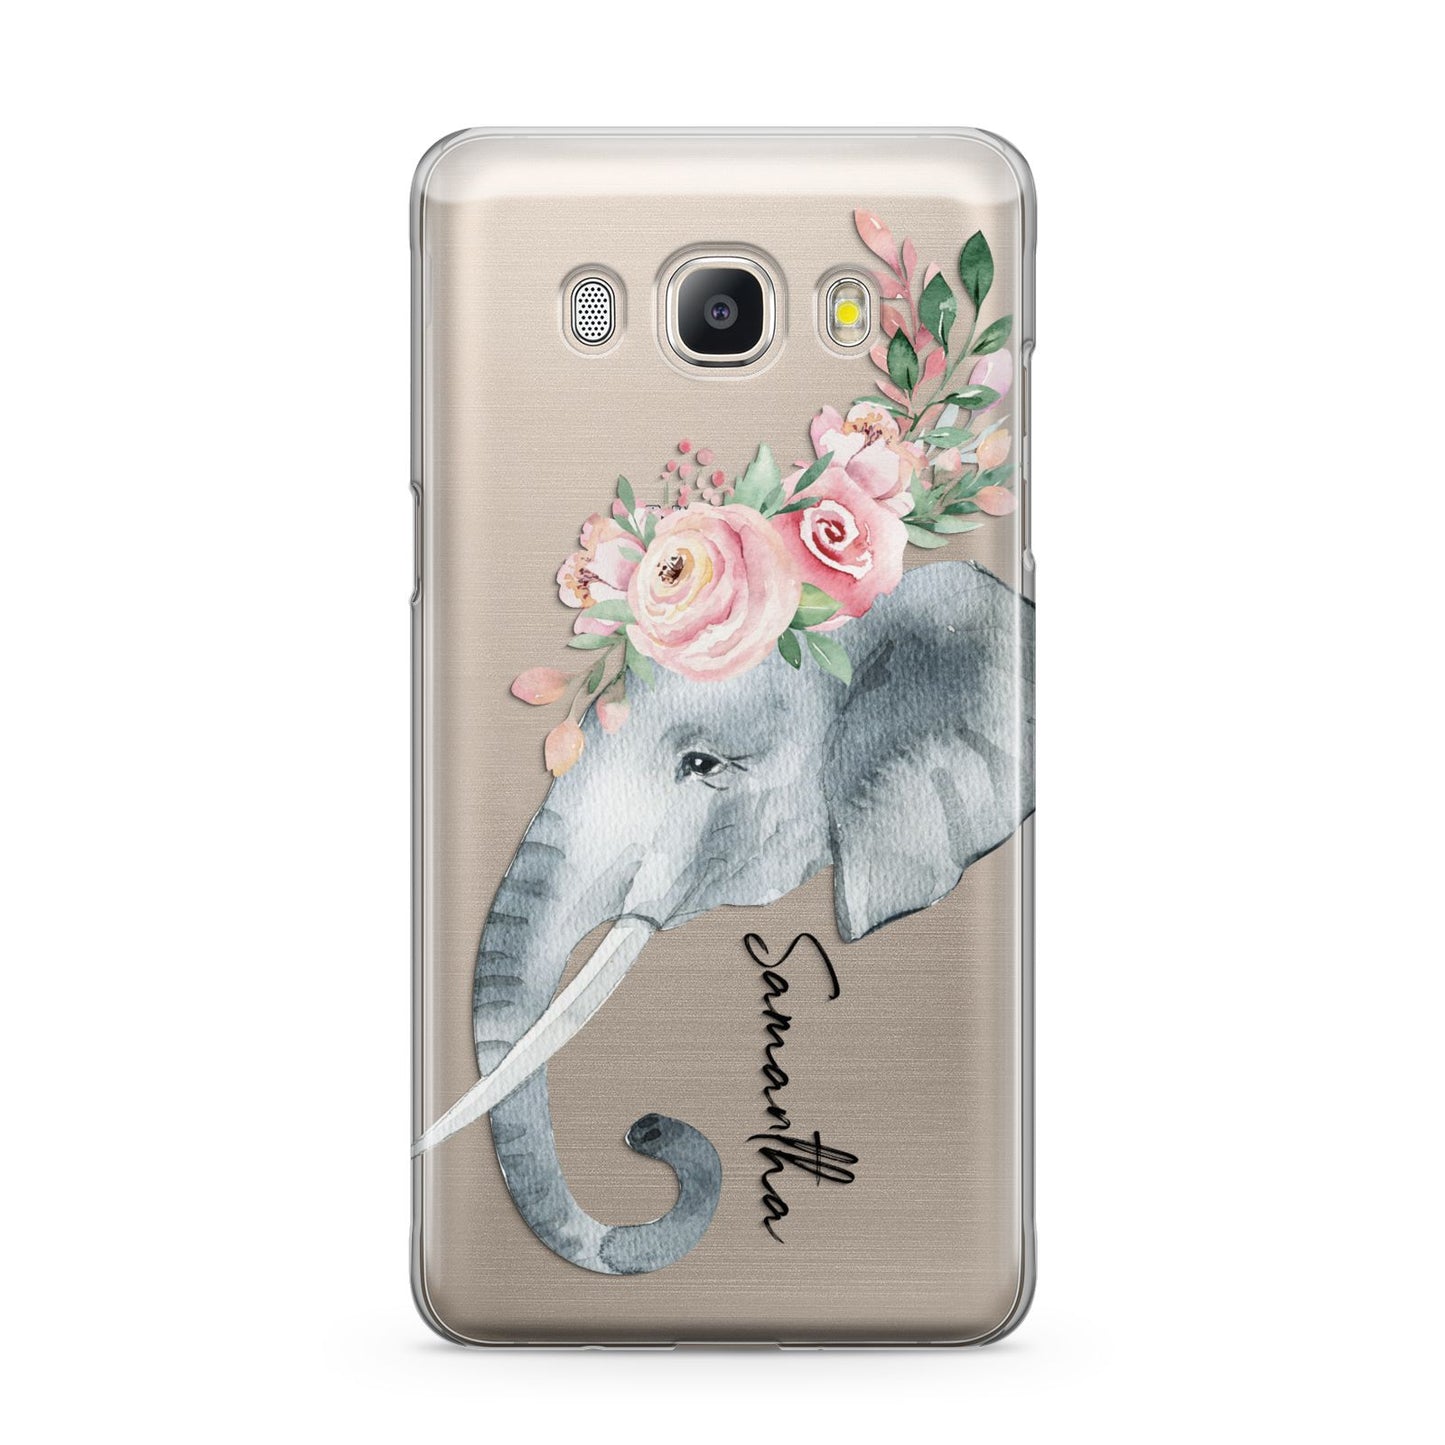 Personalised Elephant Samsung Galaxy J5 2016 Case